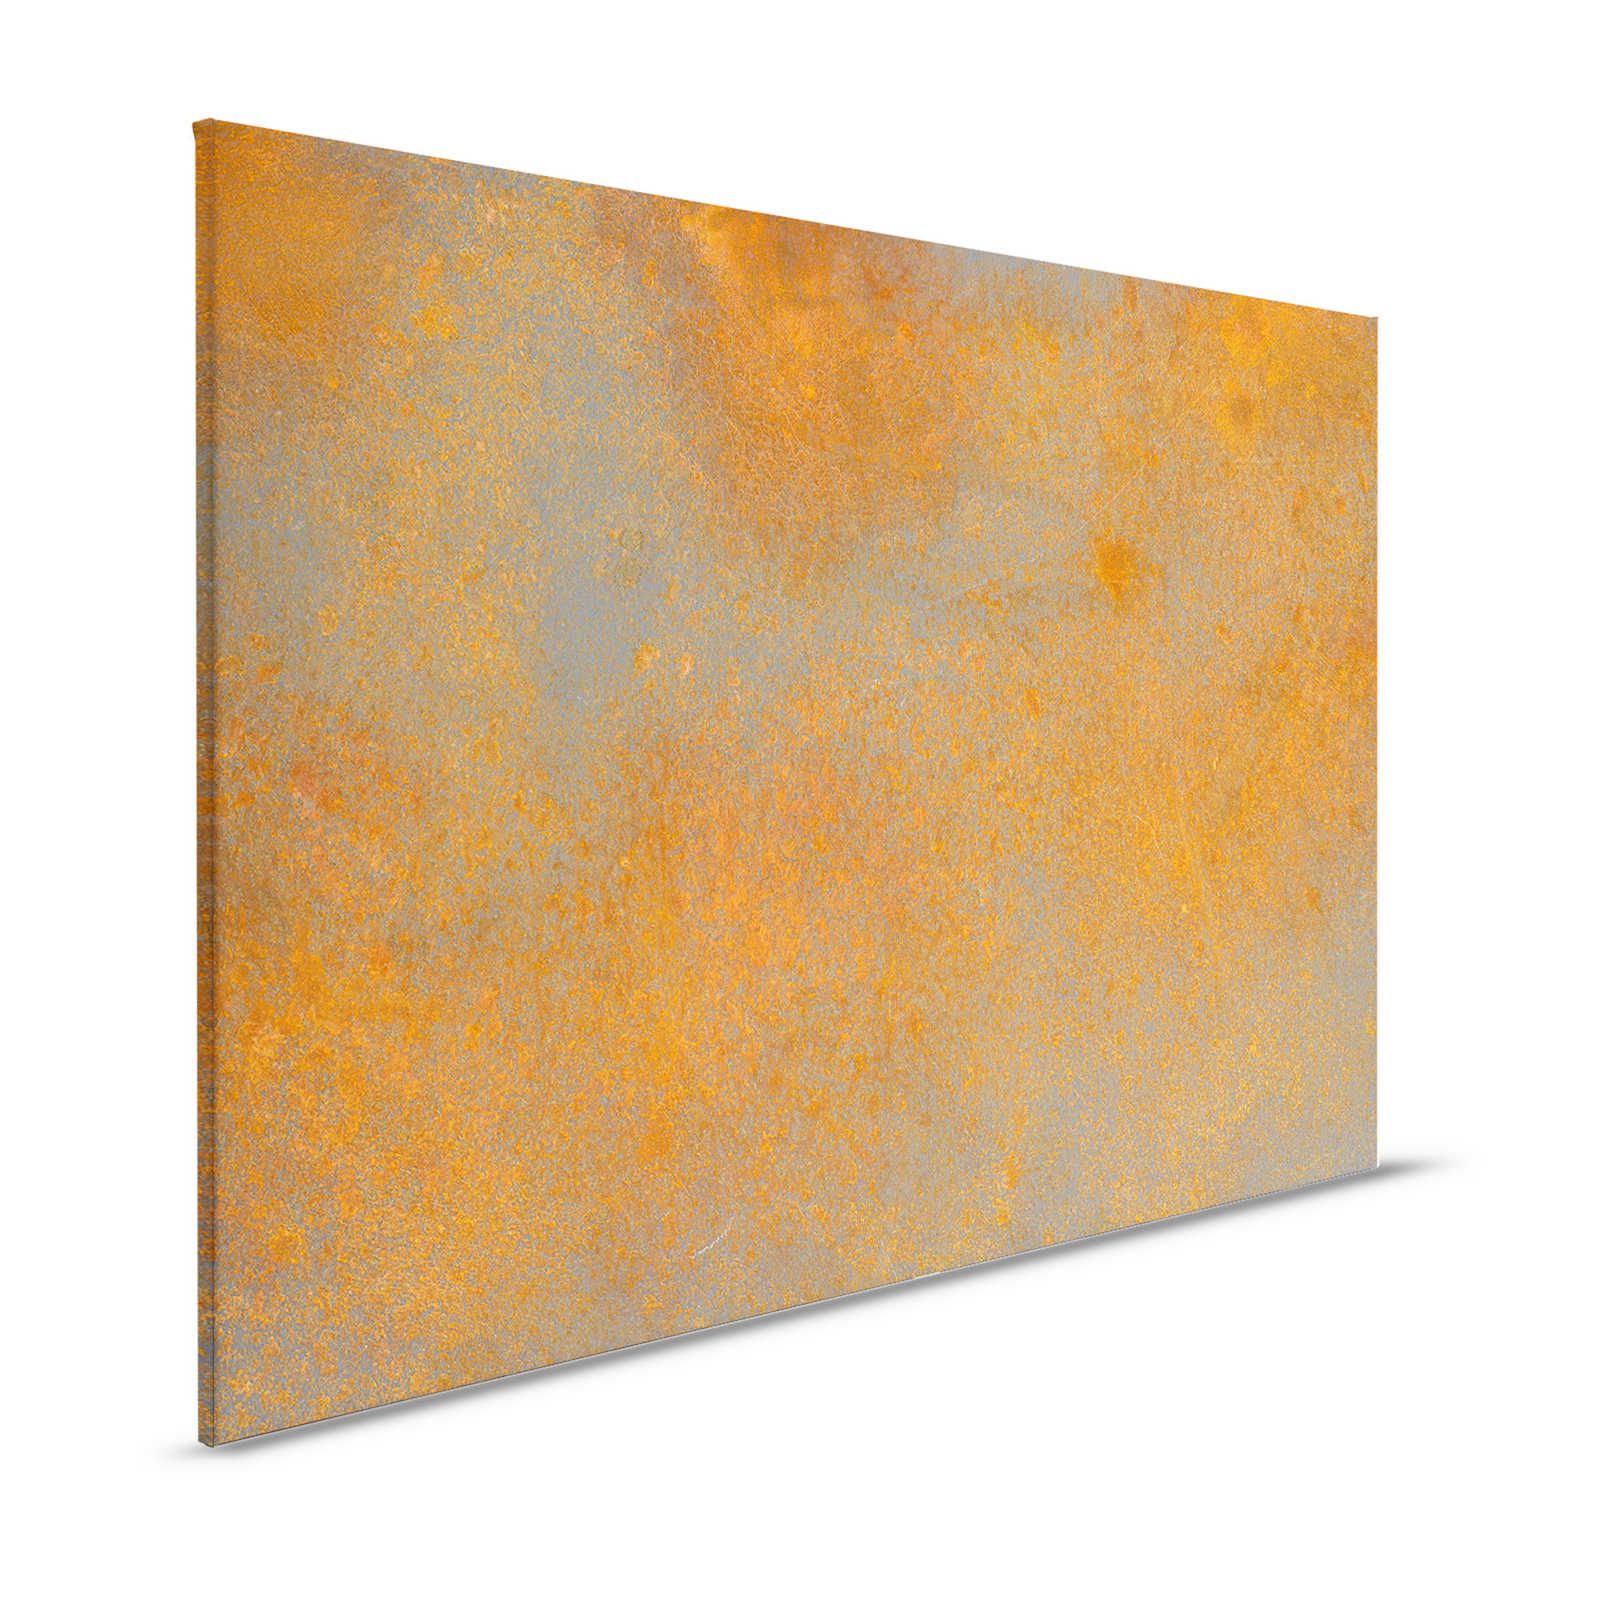 Rust Optics Canvas Painting Orange Brown with Used Look - 1.20 m x 0.80 m
